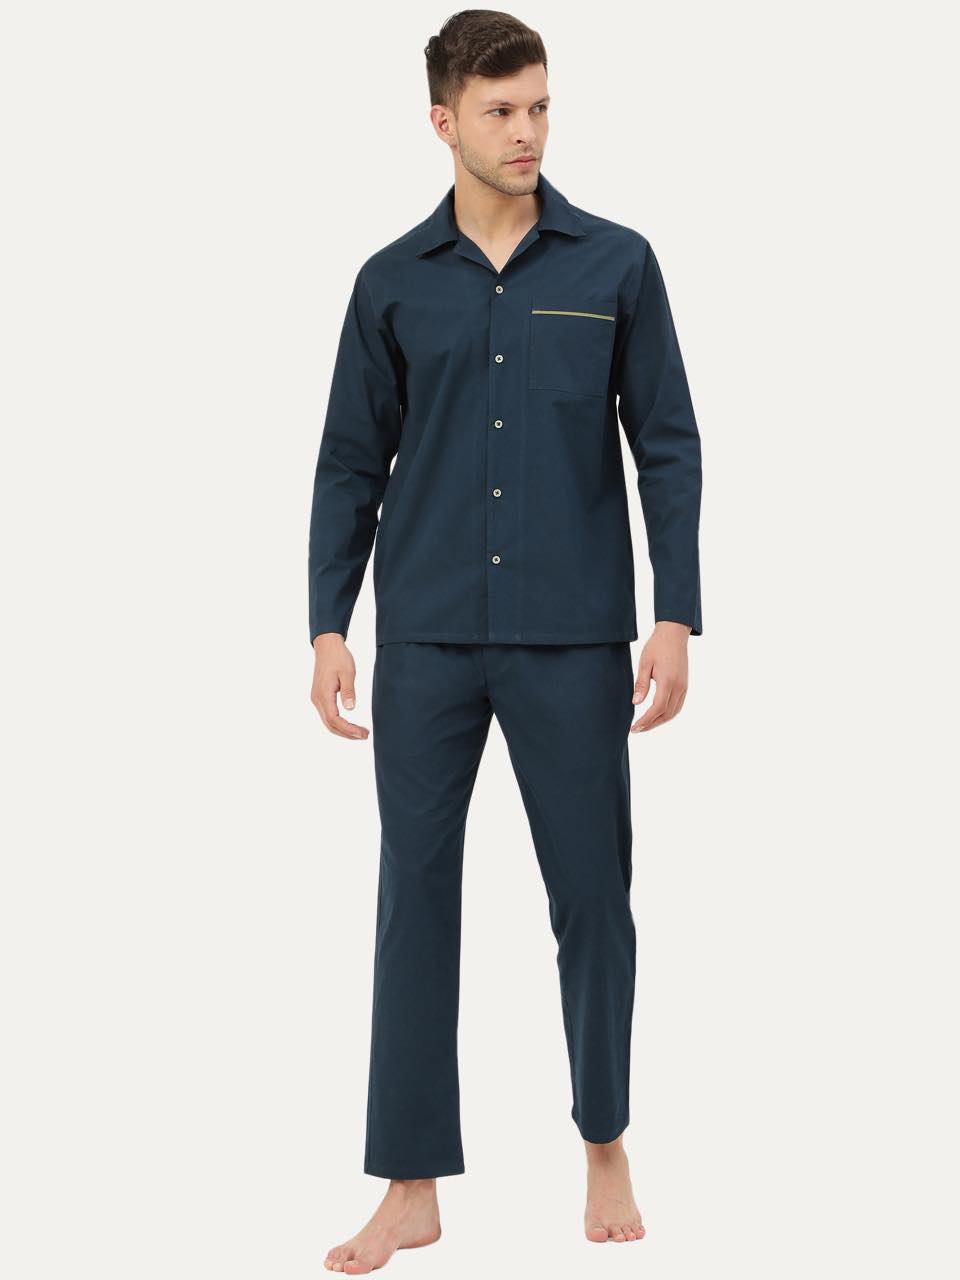 Men's Organic Cotton Solid Sleepsuit